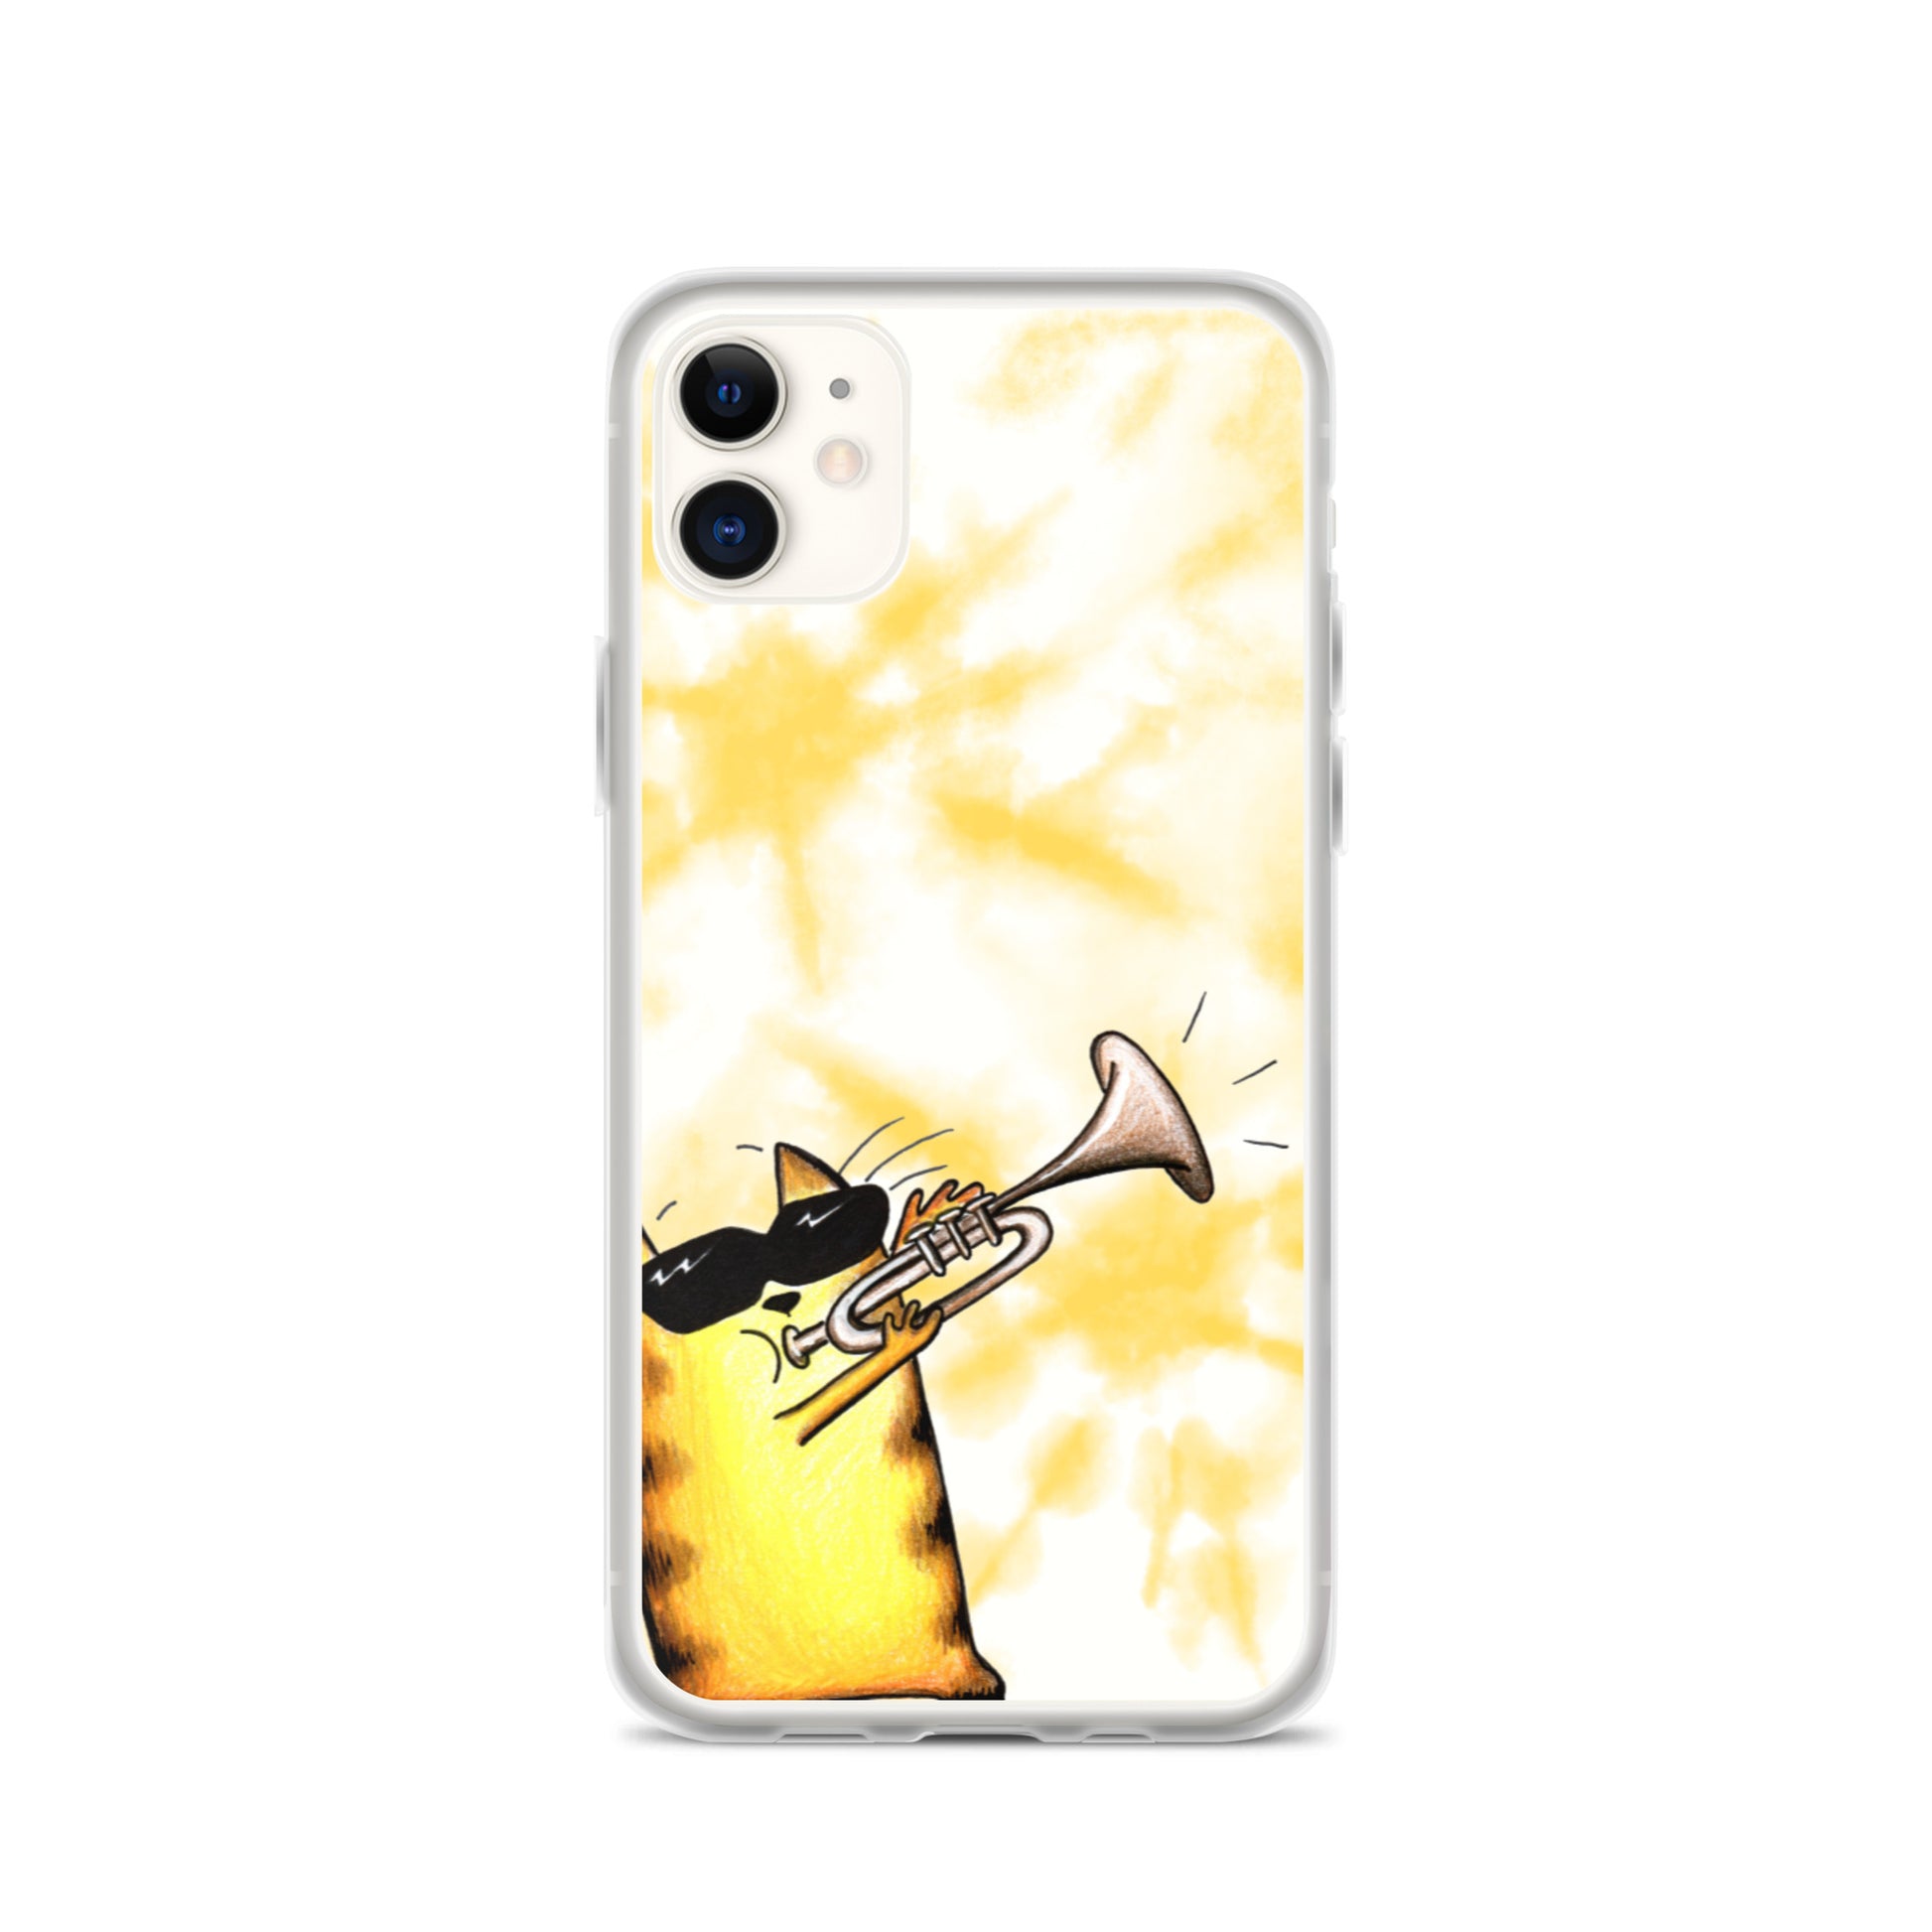 flexible yellow batik Iphone 11 case with cat plying trombone print